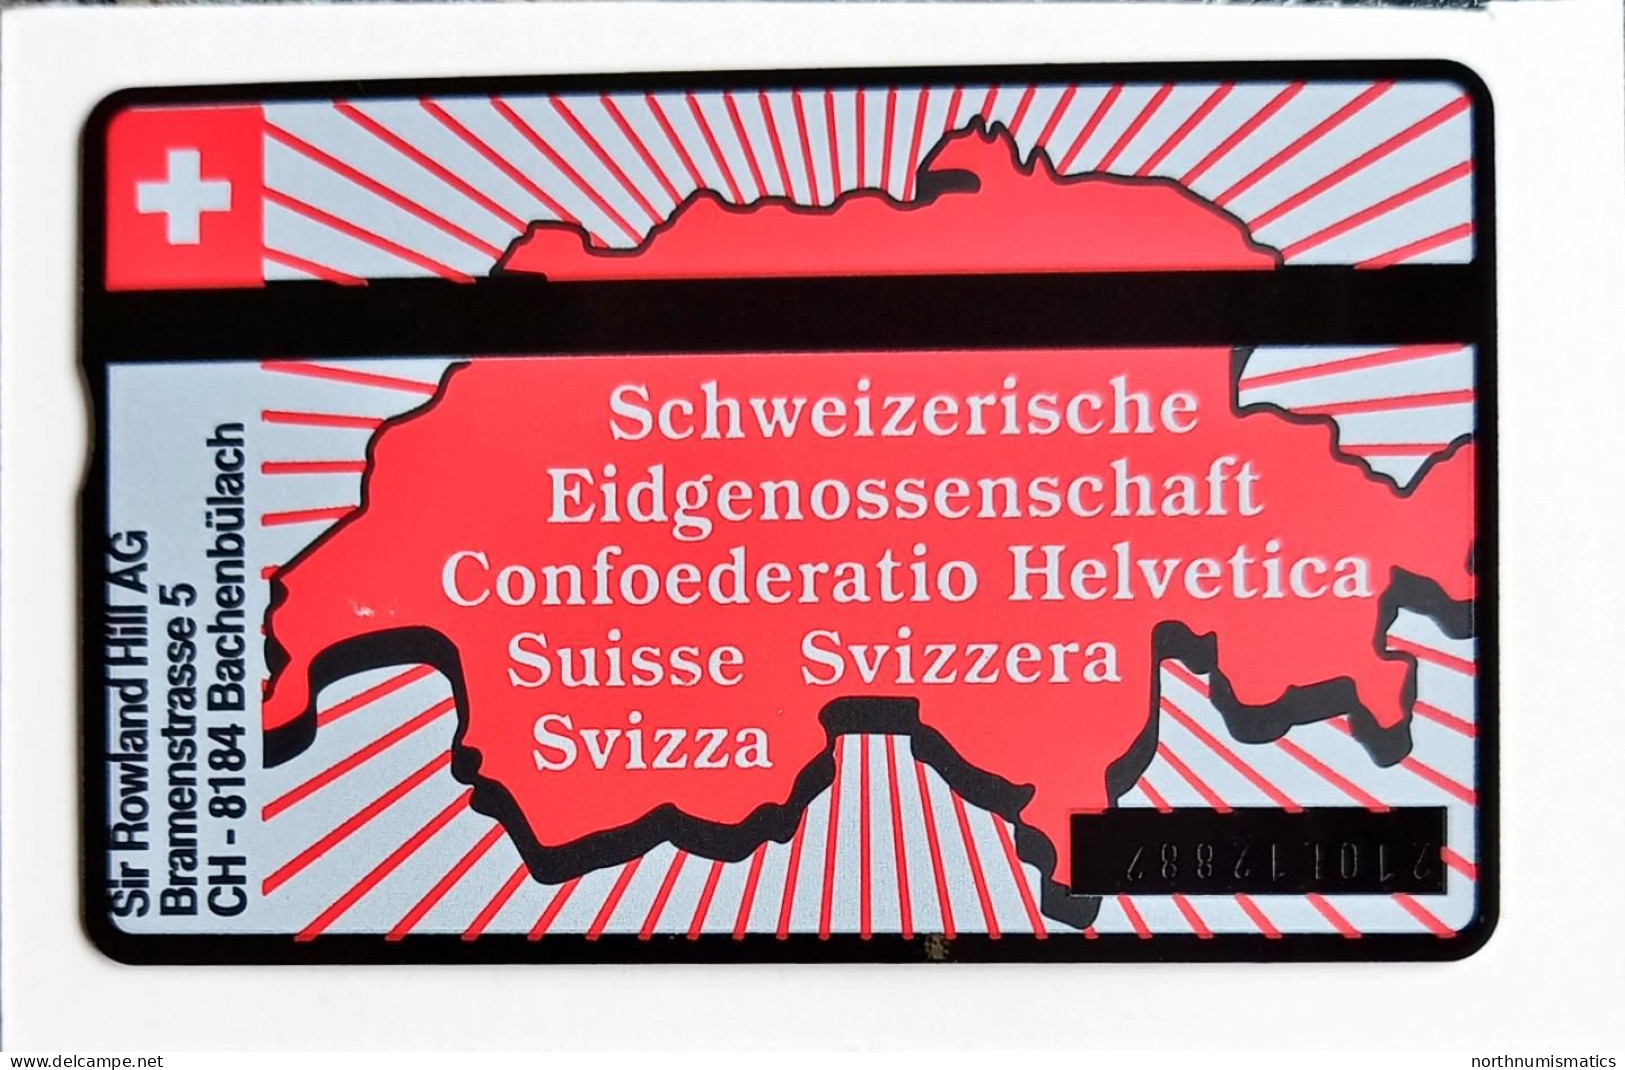 Swiss PTT Taxcard 1  Wilhelm Tell Mint 210L12882 - Verzamelingen